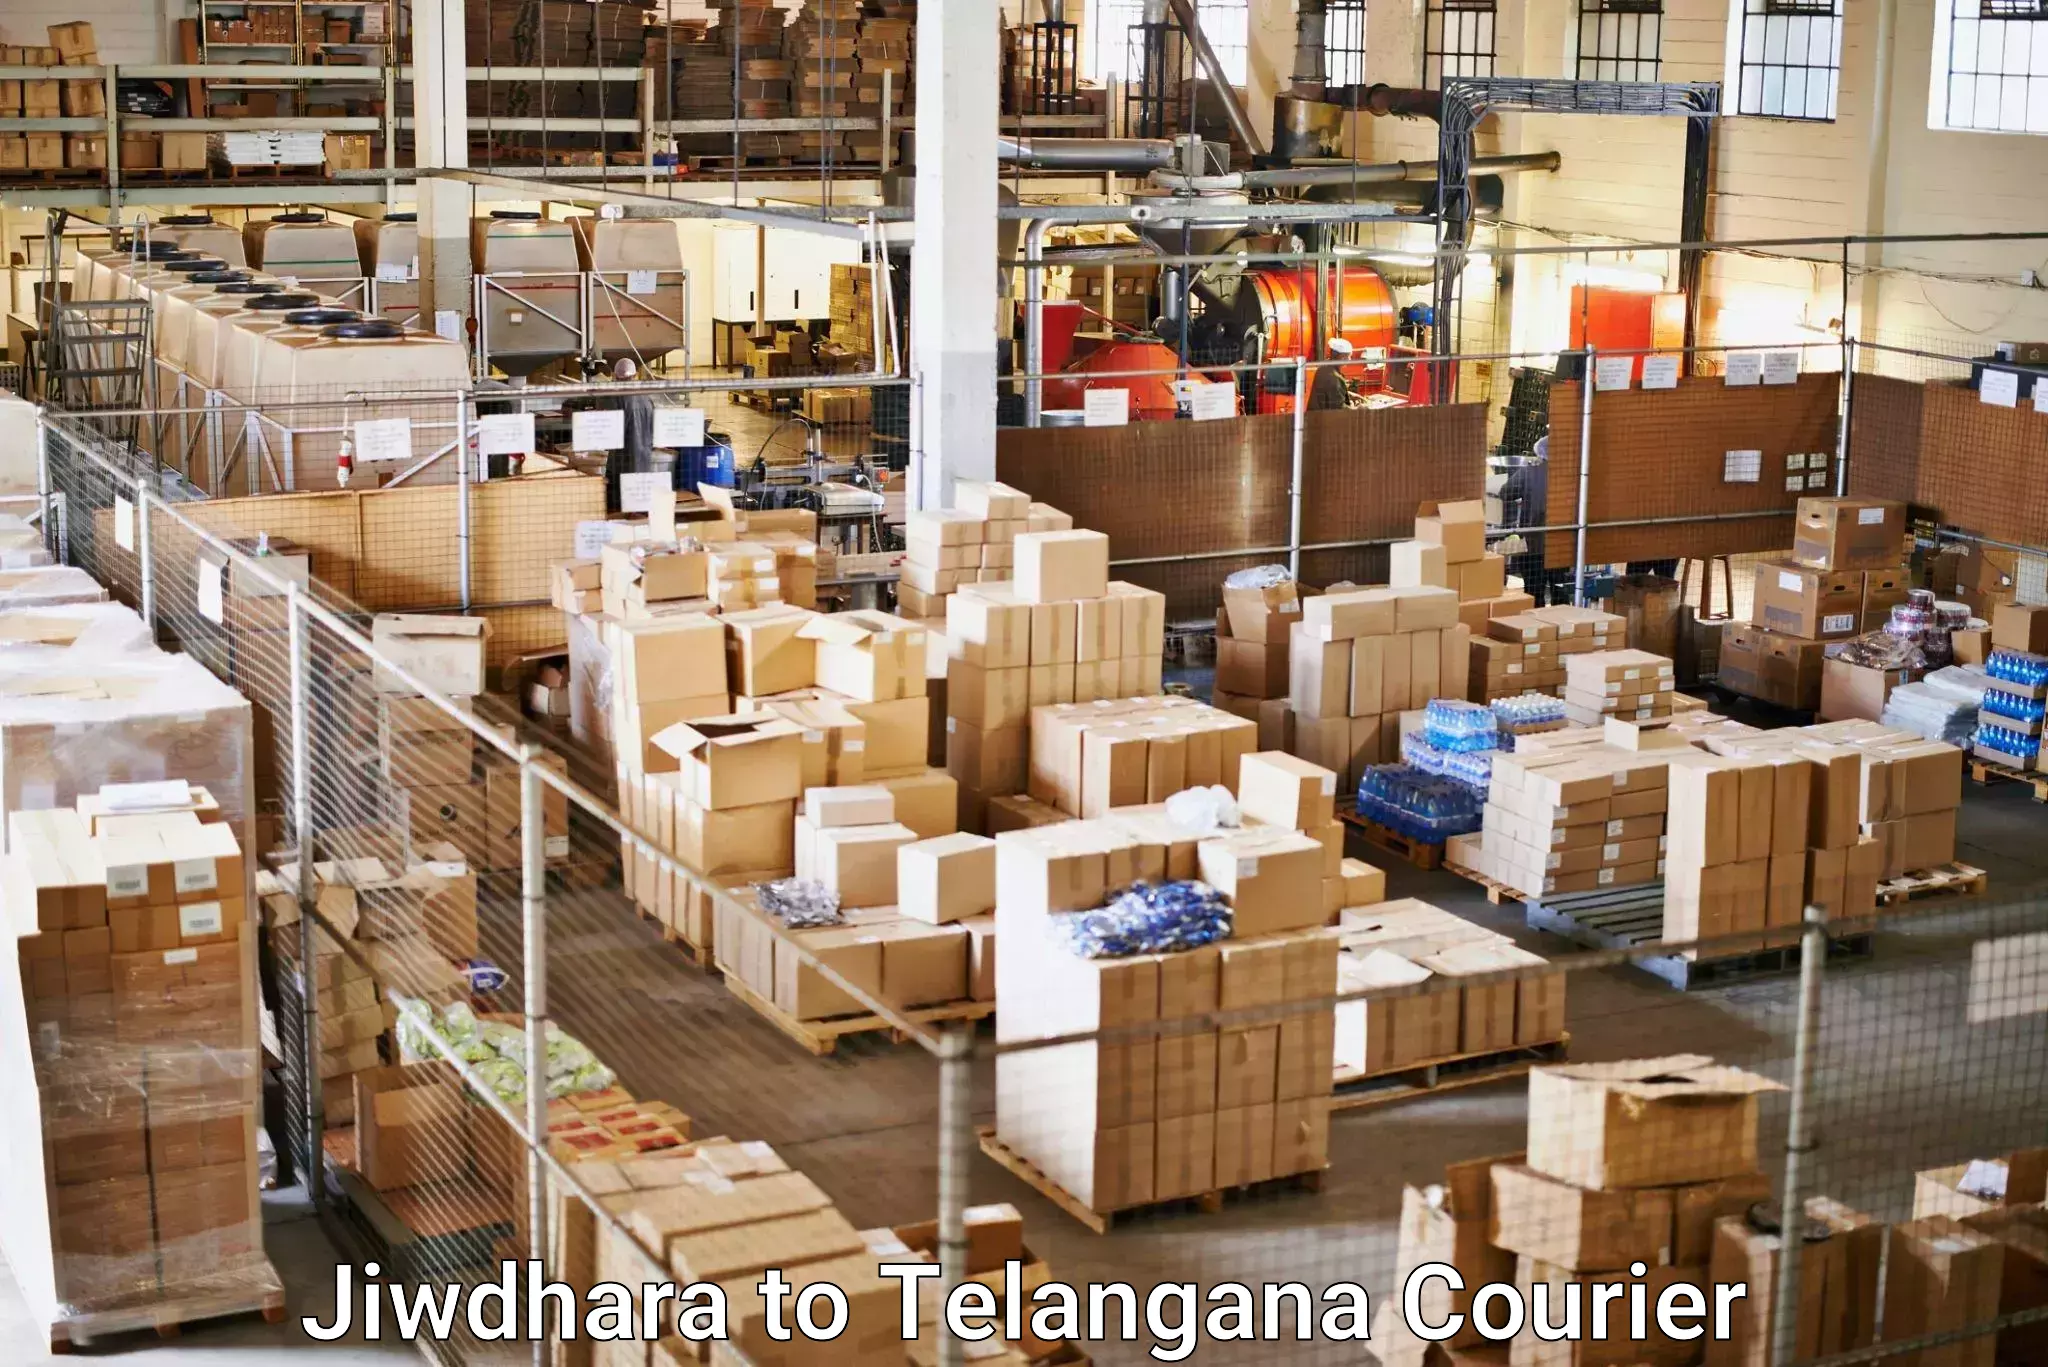 Reliable parcel services Jiwdhara to Telangana